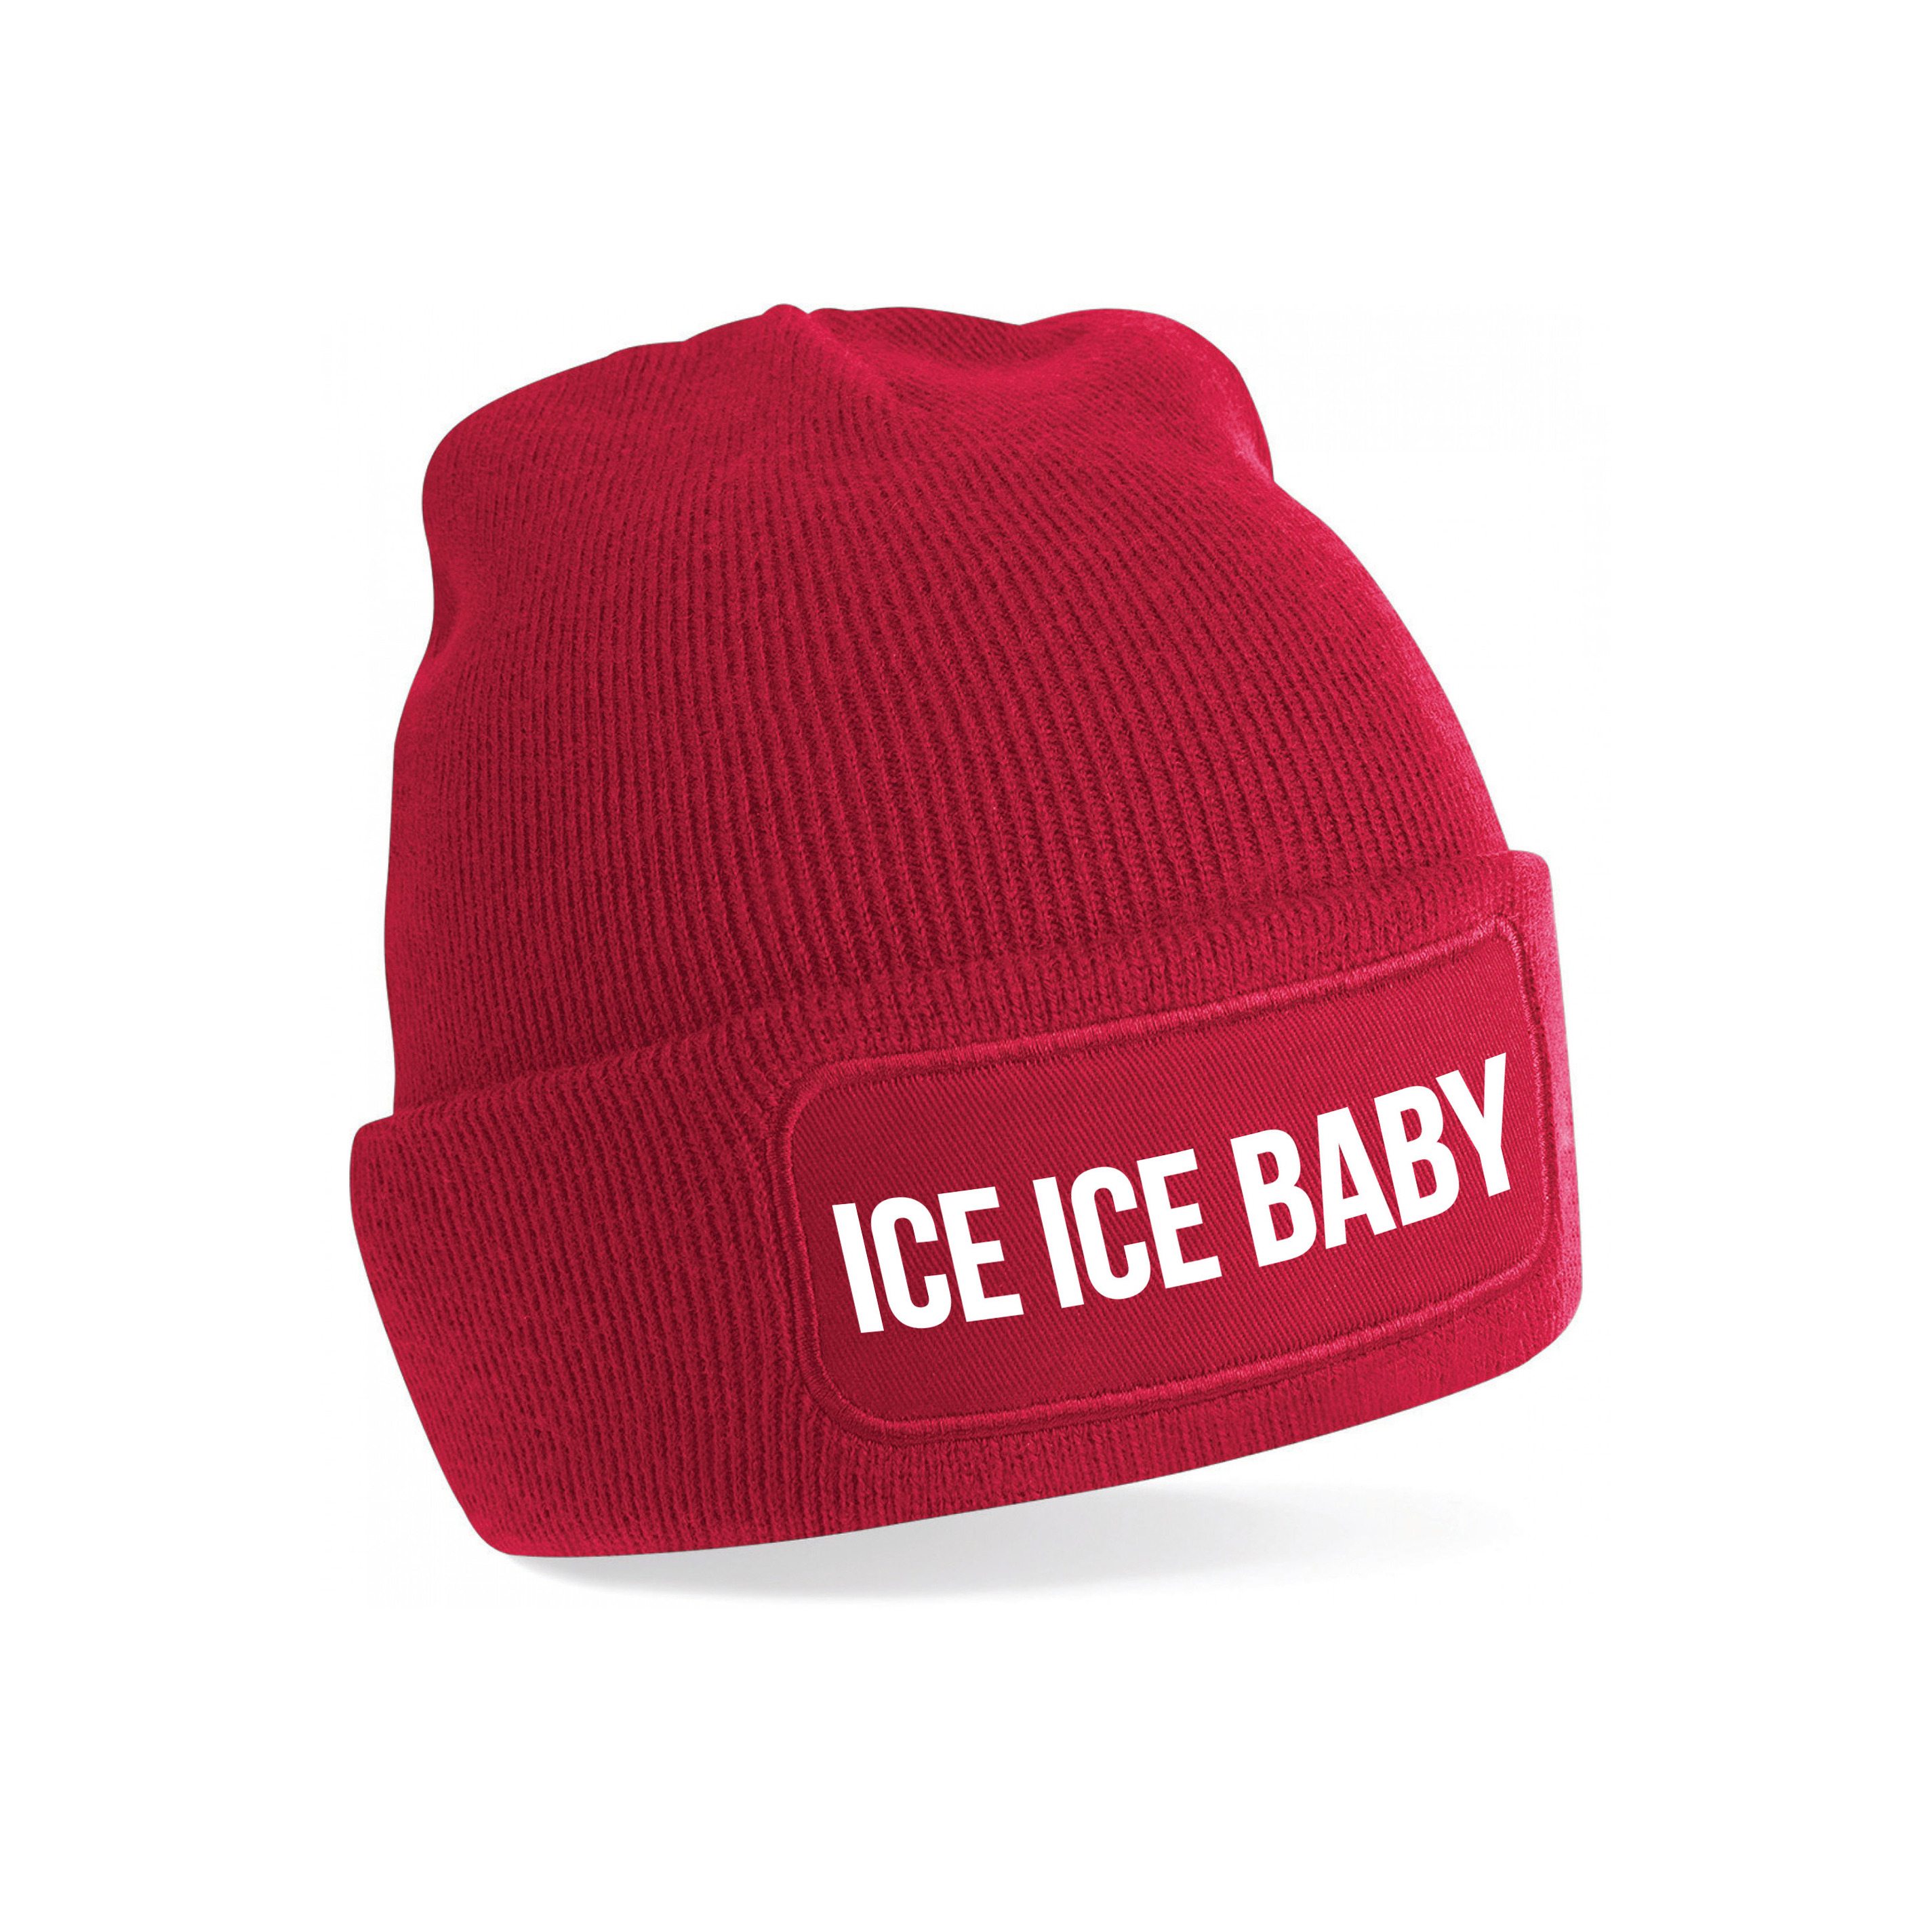 Ice ice baby muts unisex one size rood